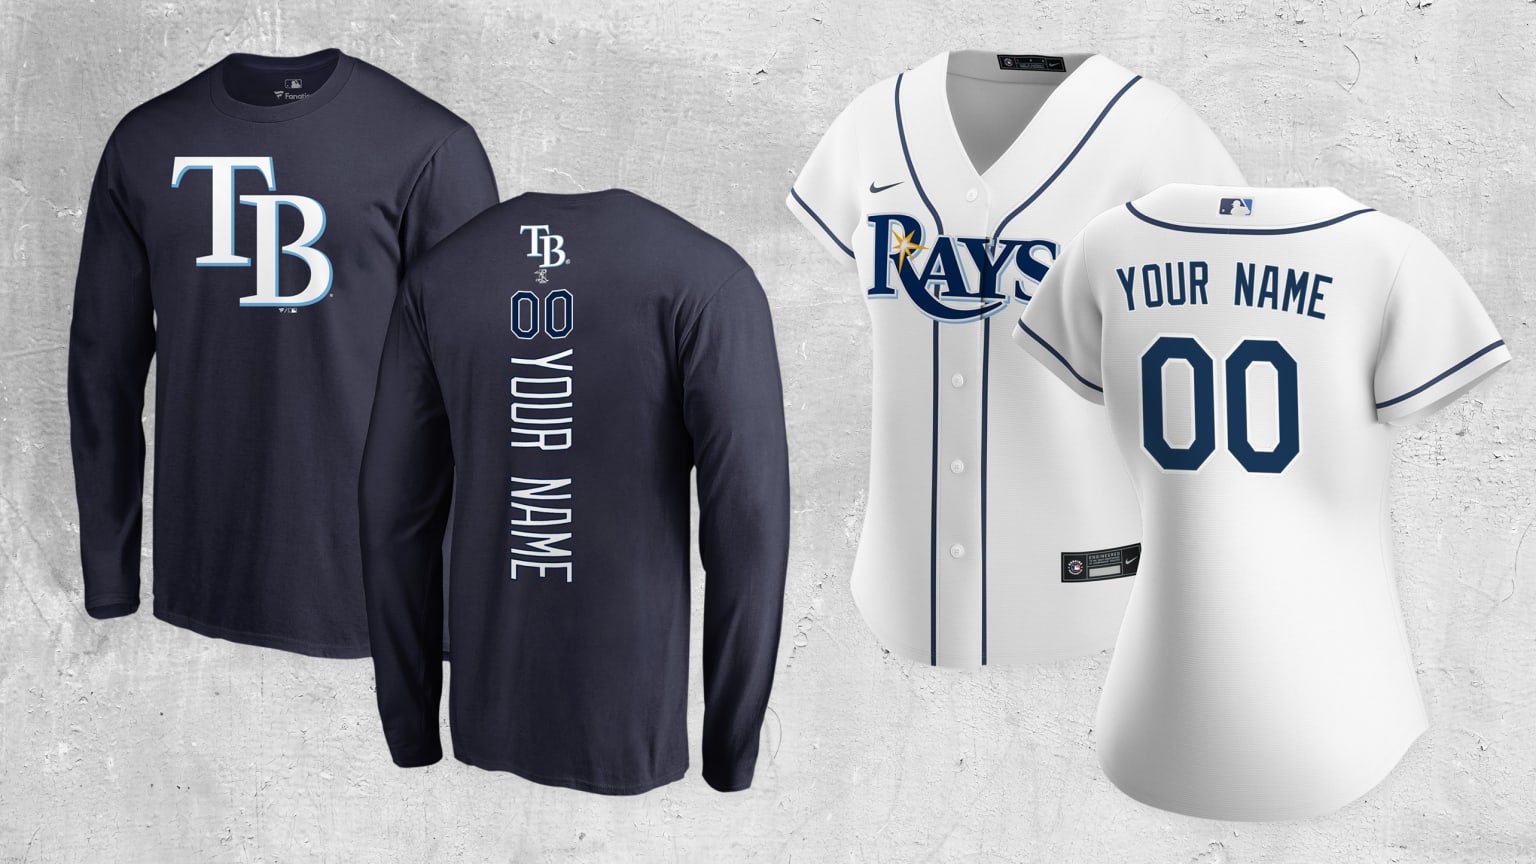 Tampa Bay Rays MLB Baseball Jersey Shirt Custom Name And Number